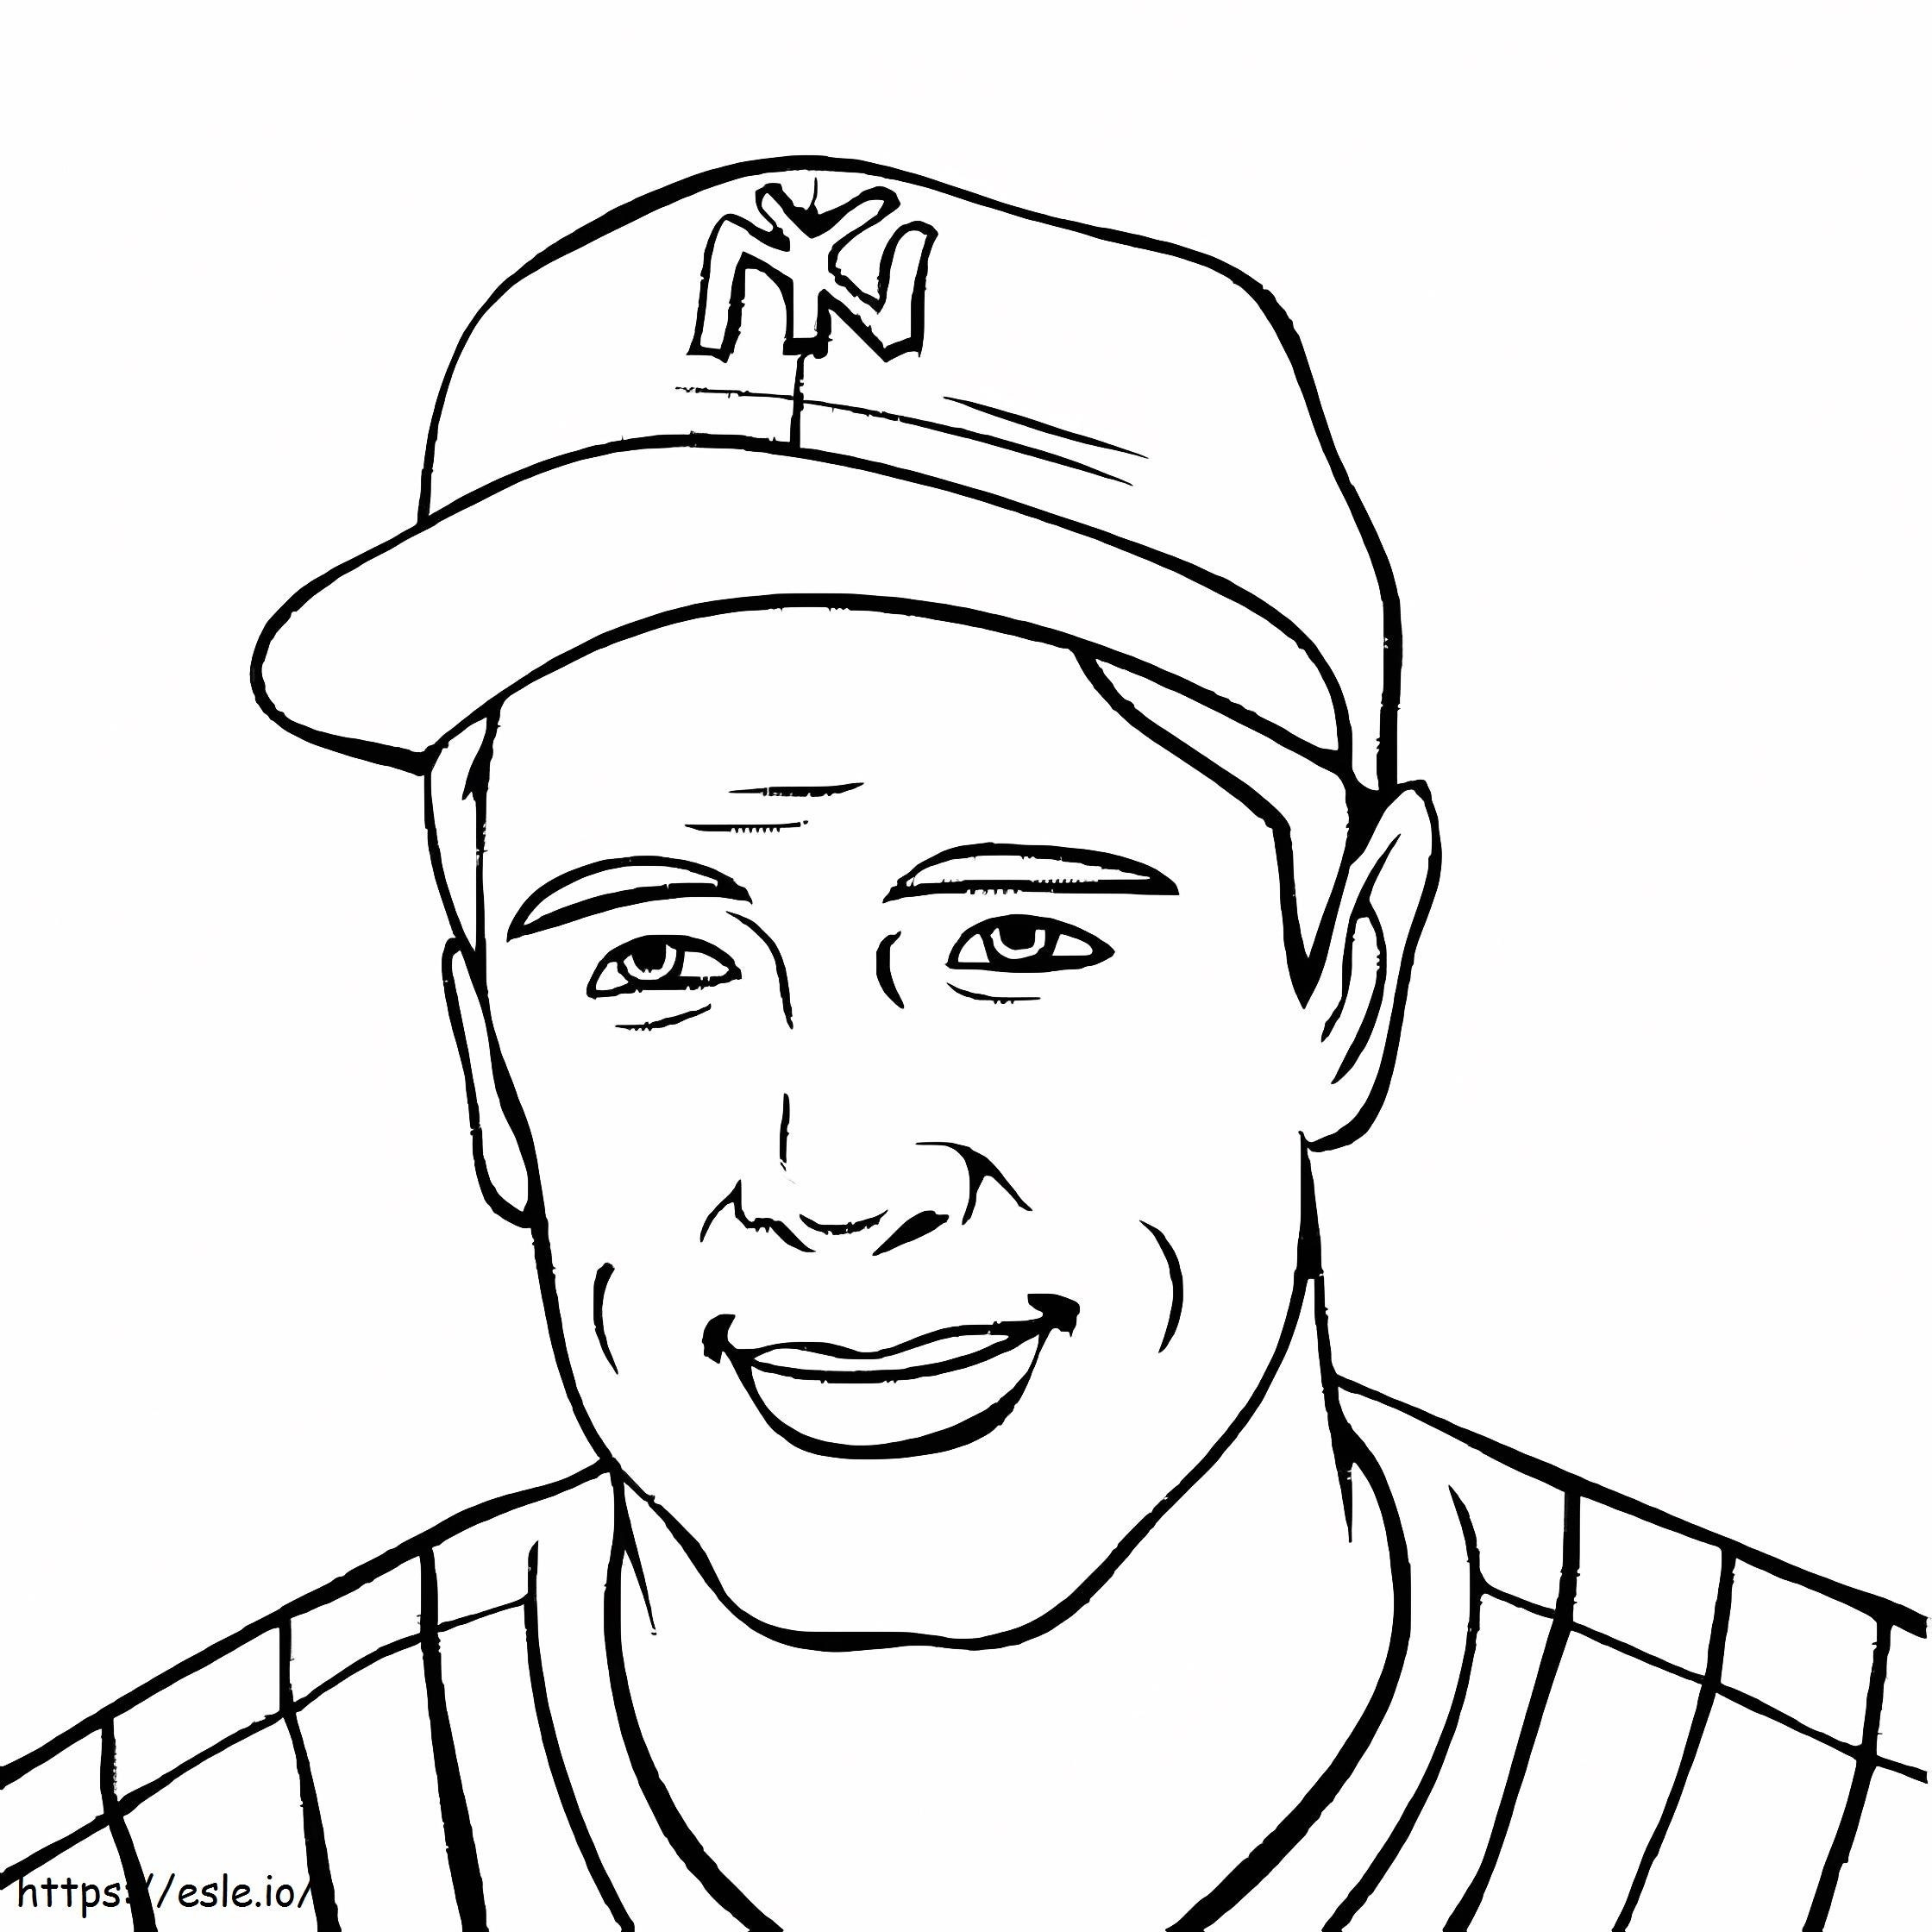 Lou Gehrig New York Yankees coloring page